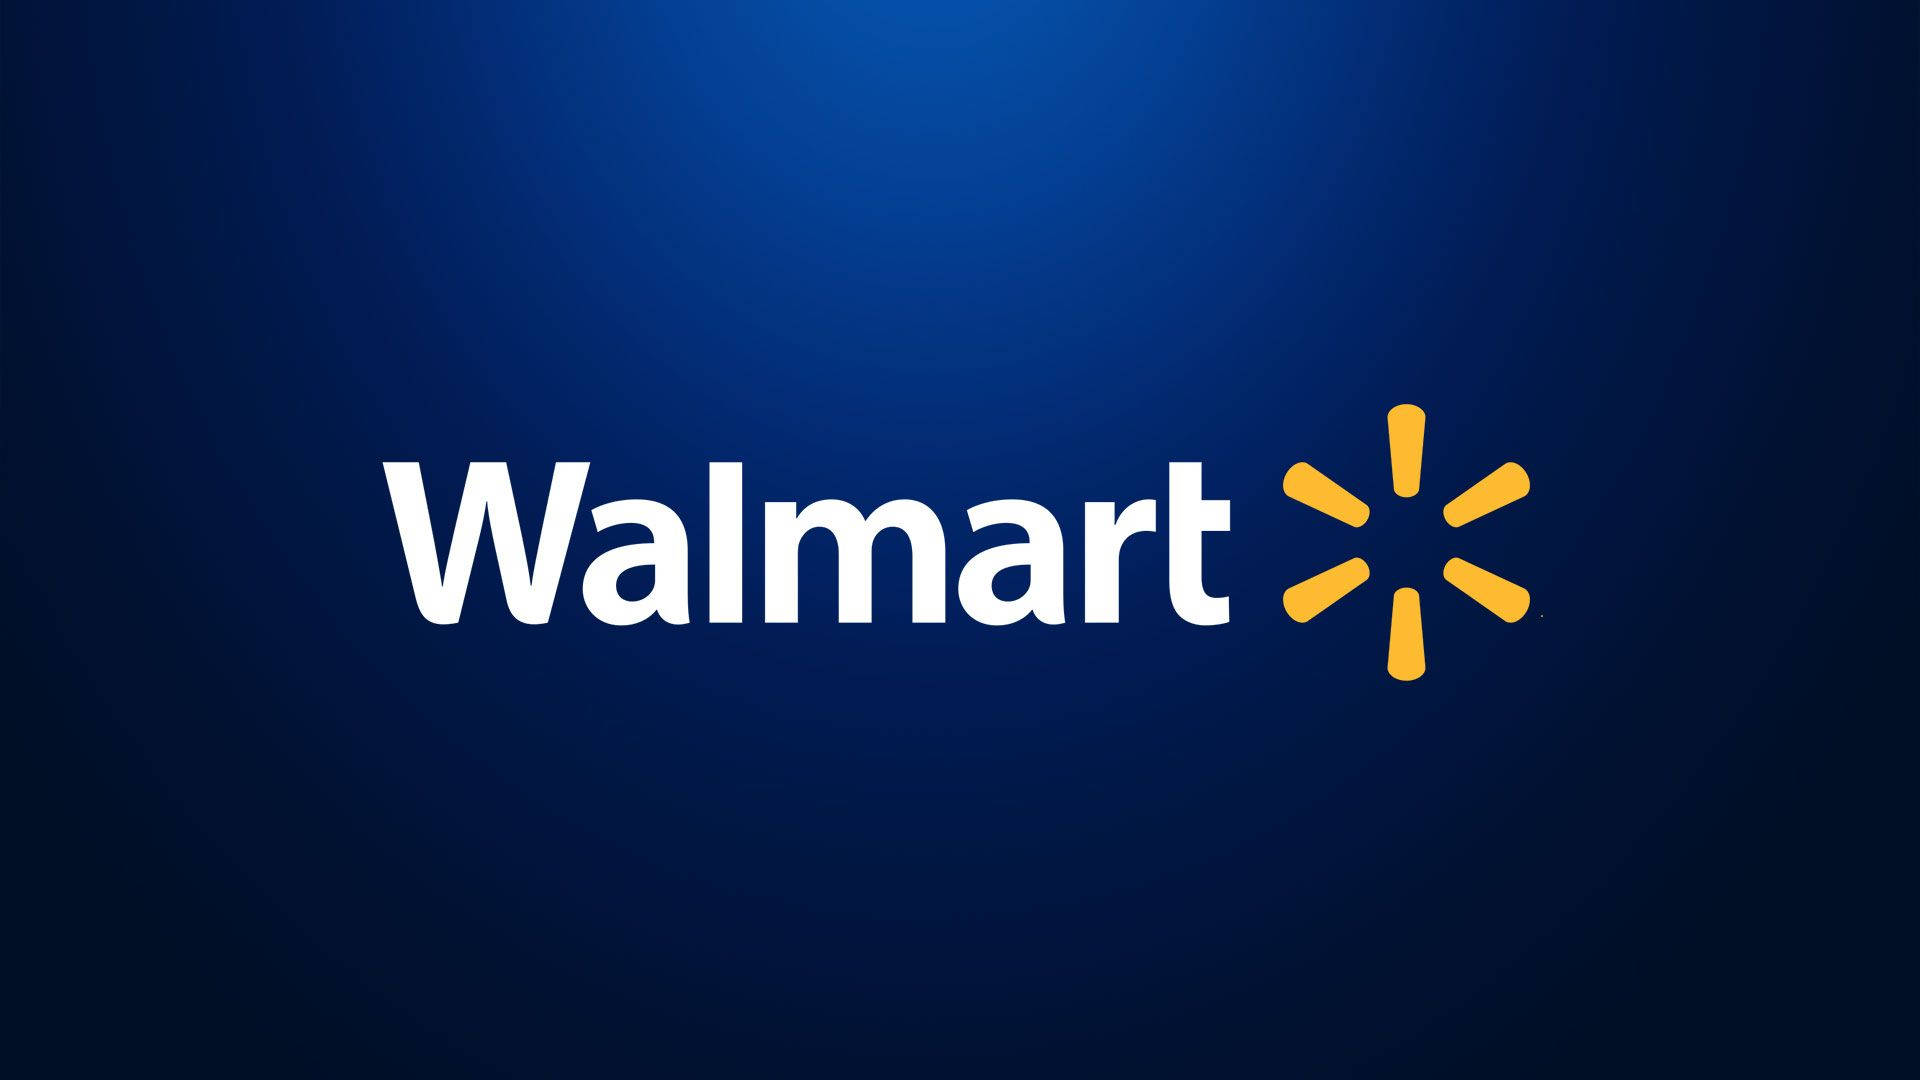 Walmart Announces Black Friday Sale Details and Previews Early Deals - CNET